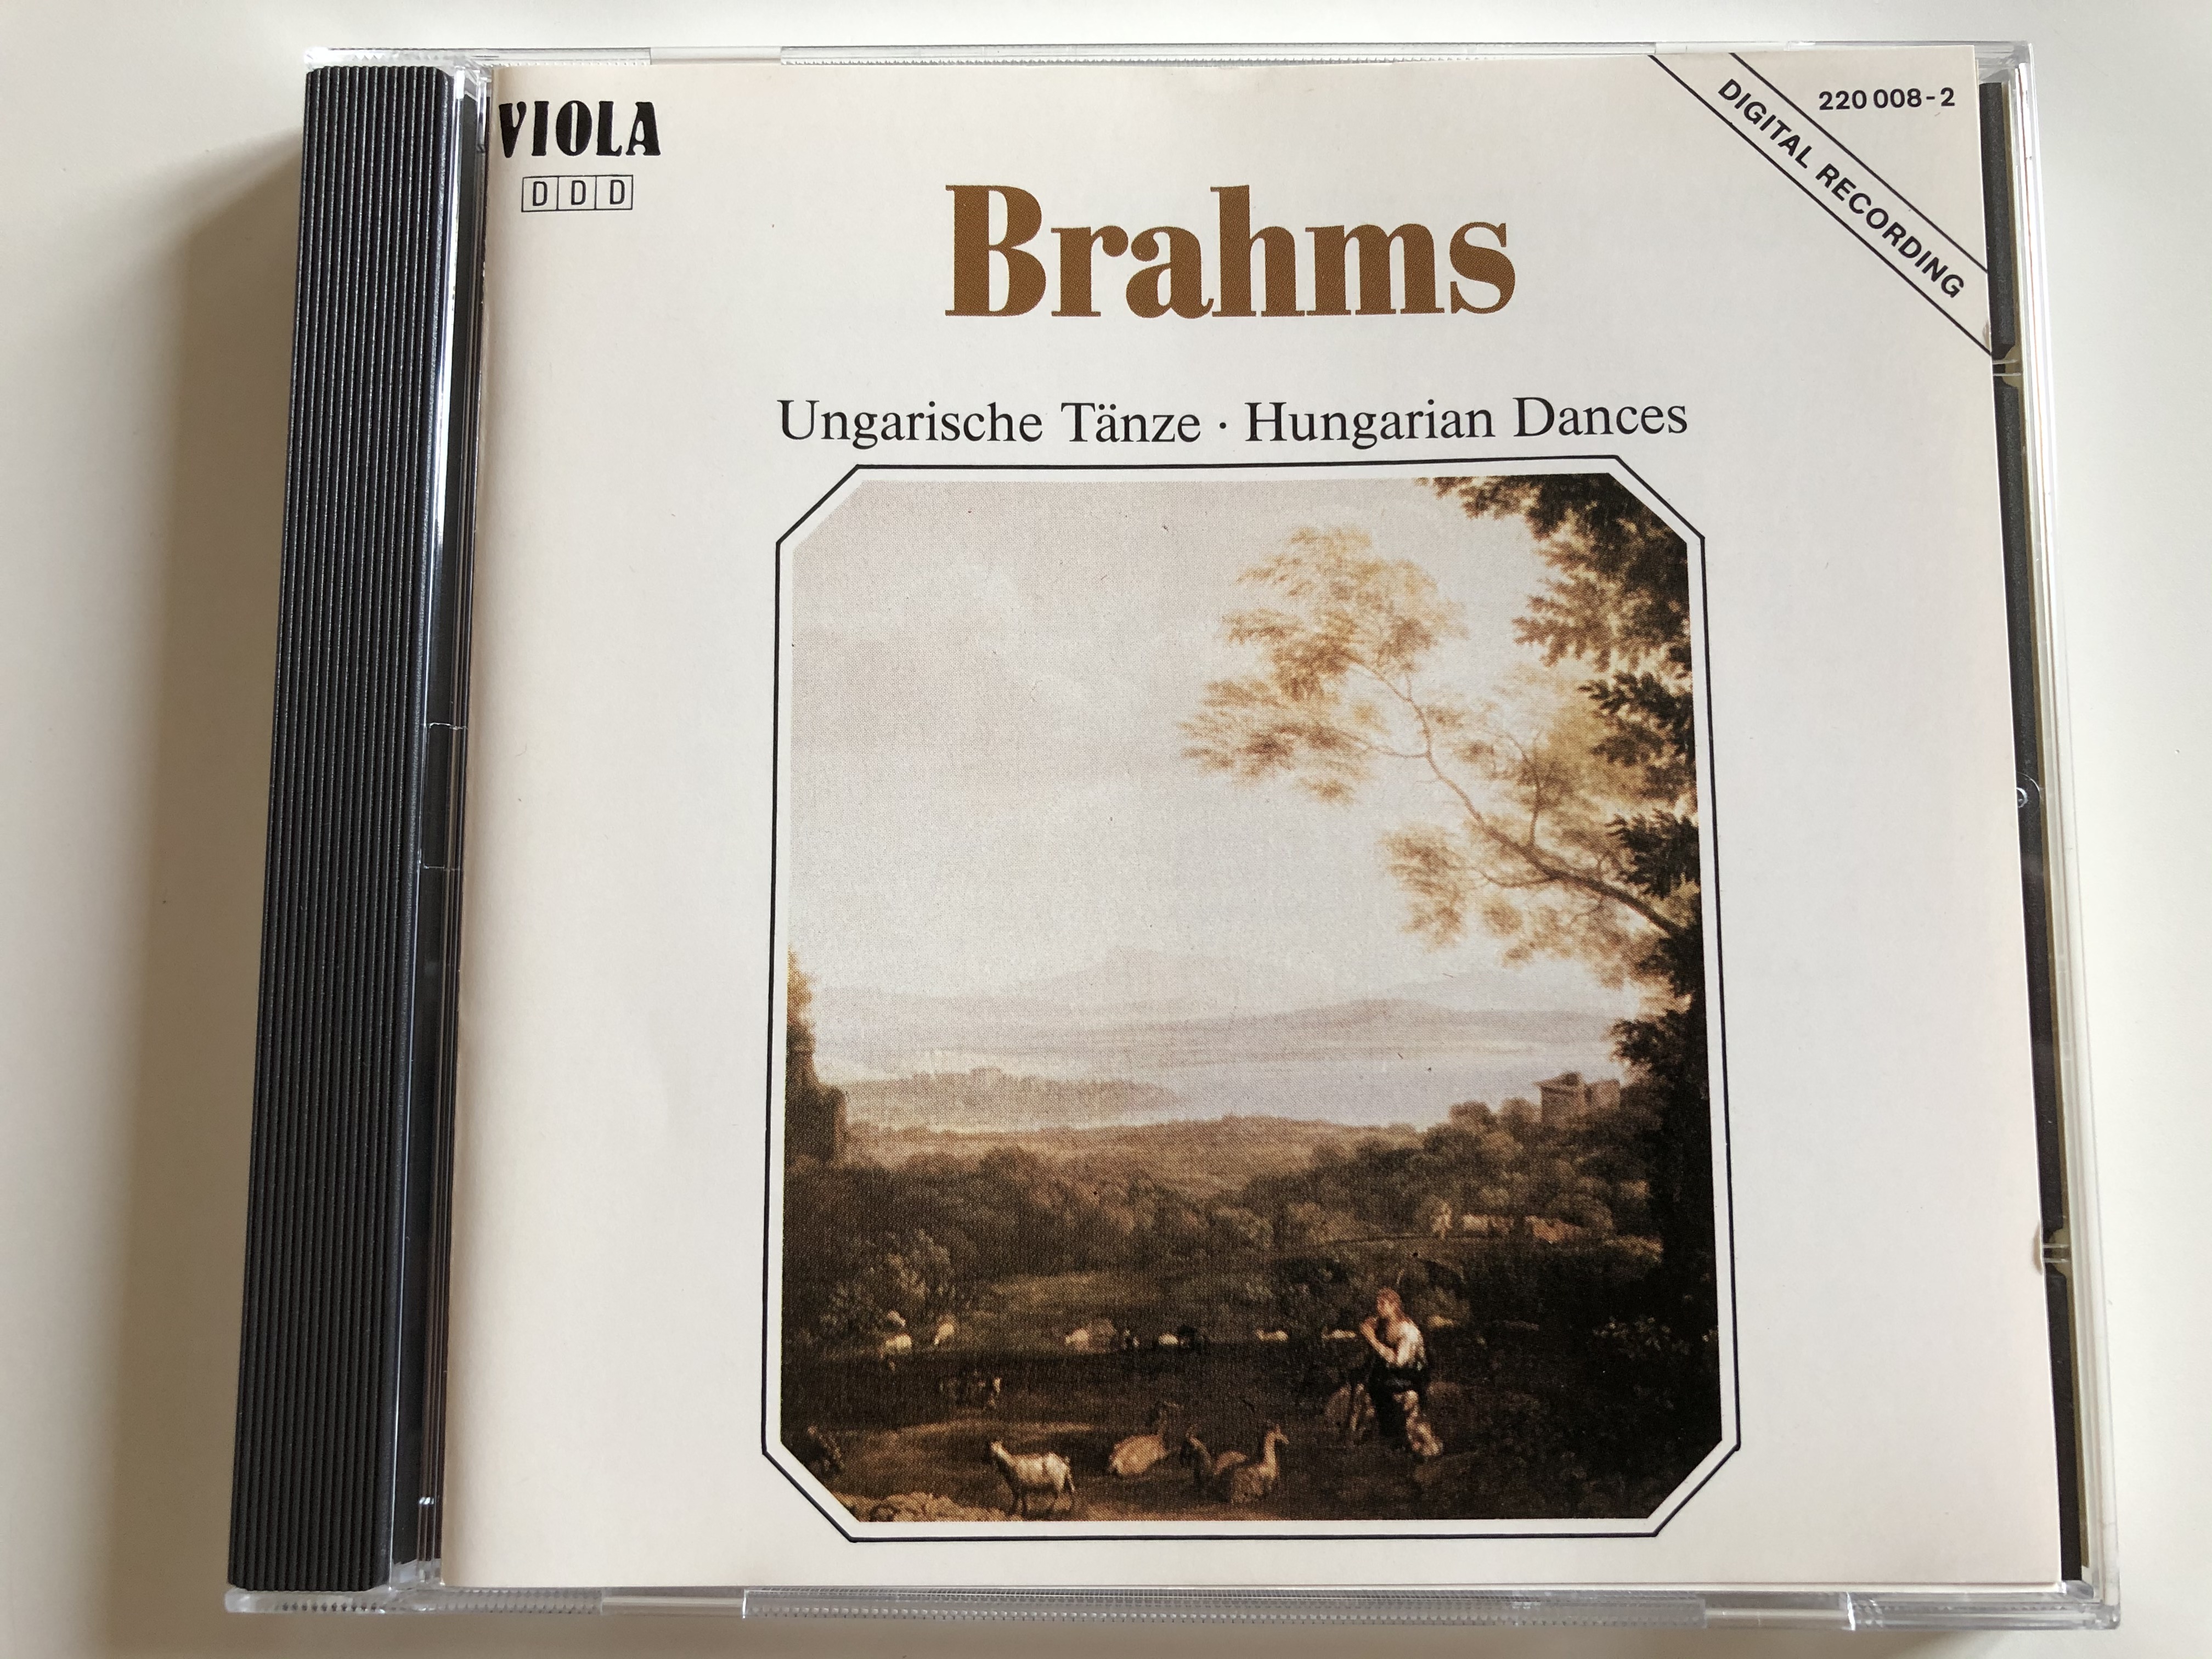 brahms-ungarische-t-nze-hungarian-dances-viola-audio-cd-stereo-220-008-2-1-.jpg